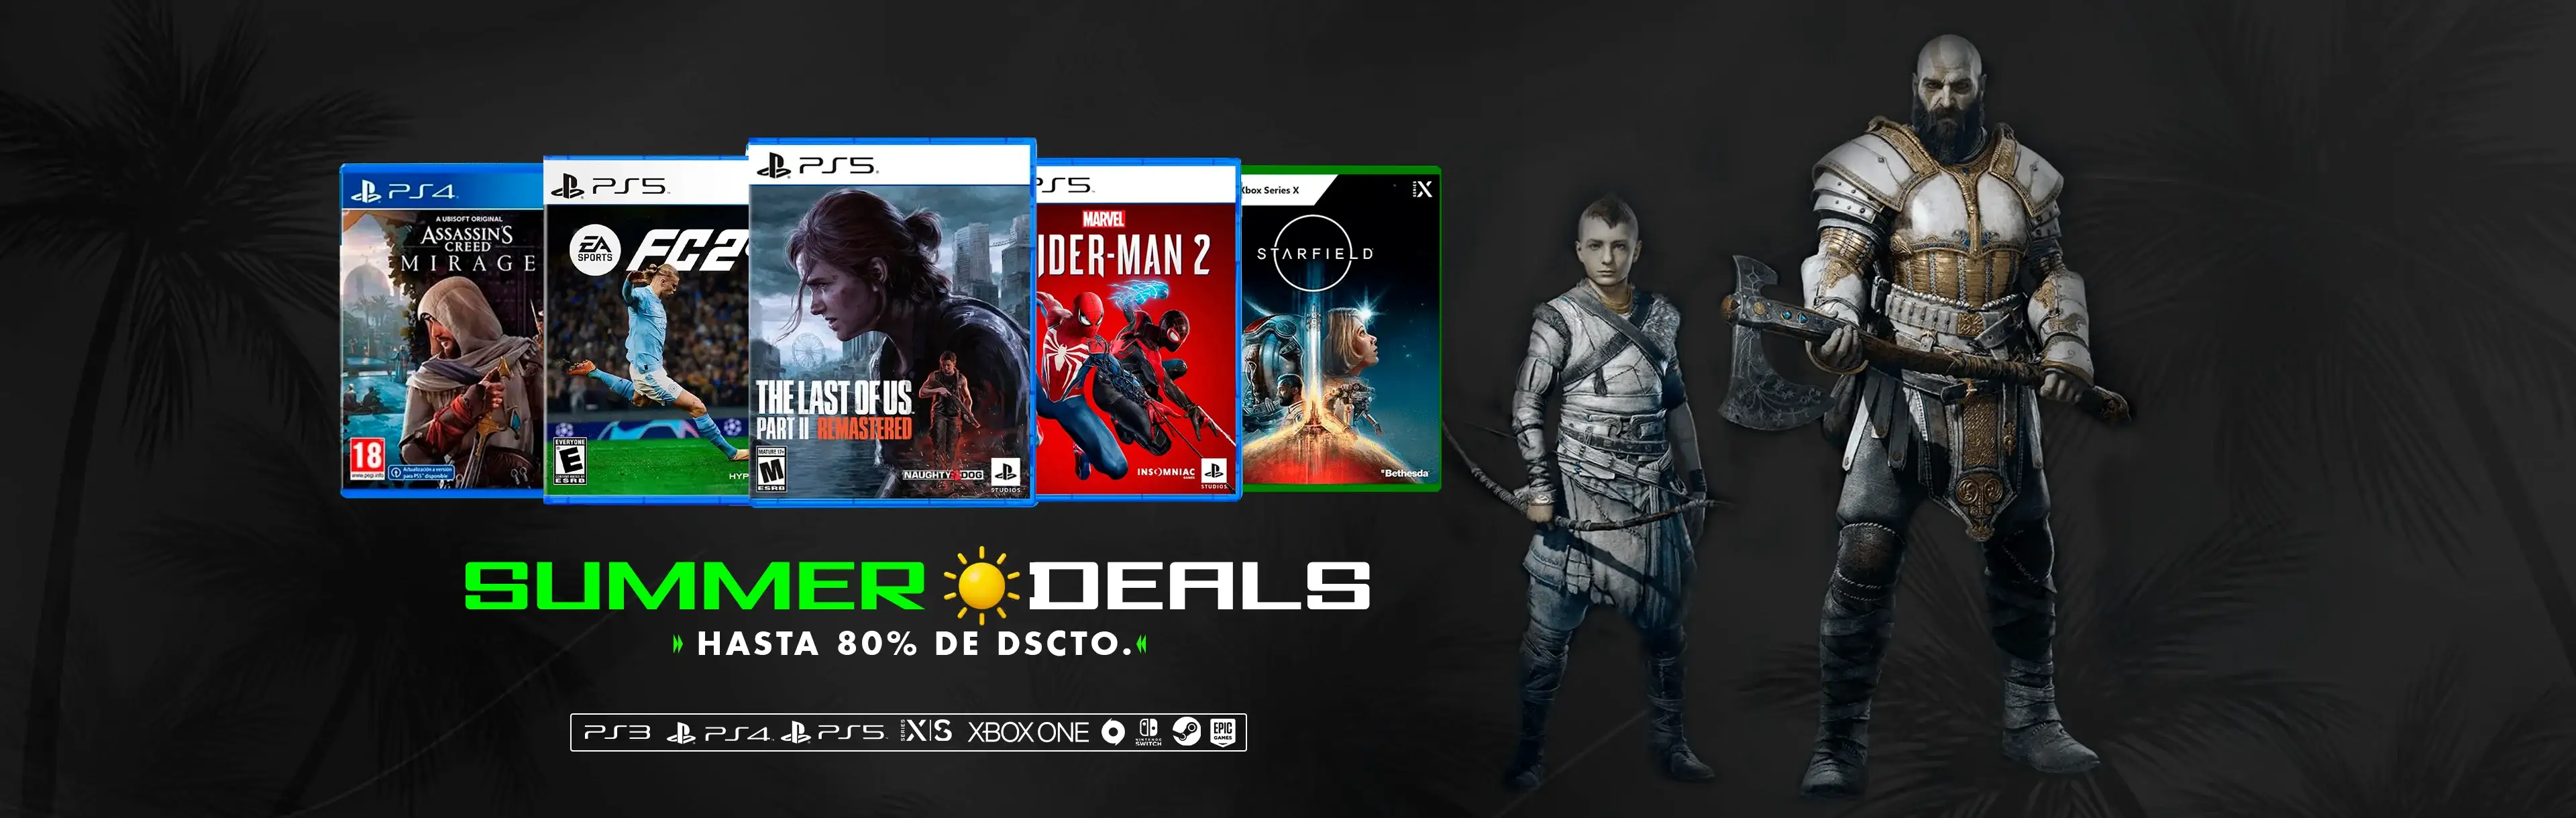 Store Games Bolivia  Venta de juegos Digitales PS3 PS4 Ofertas